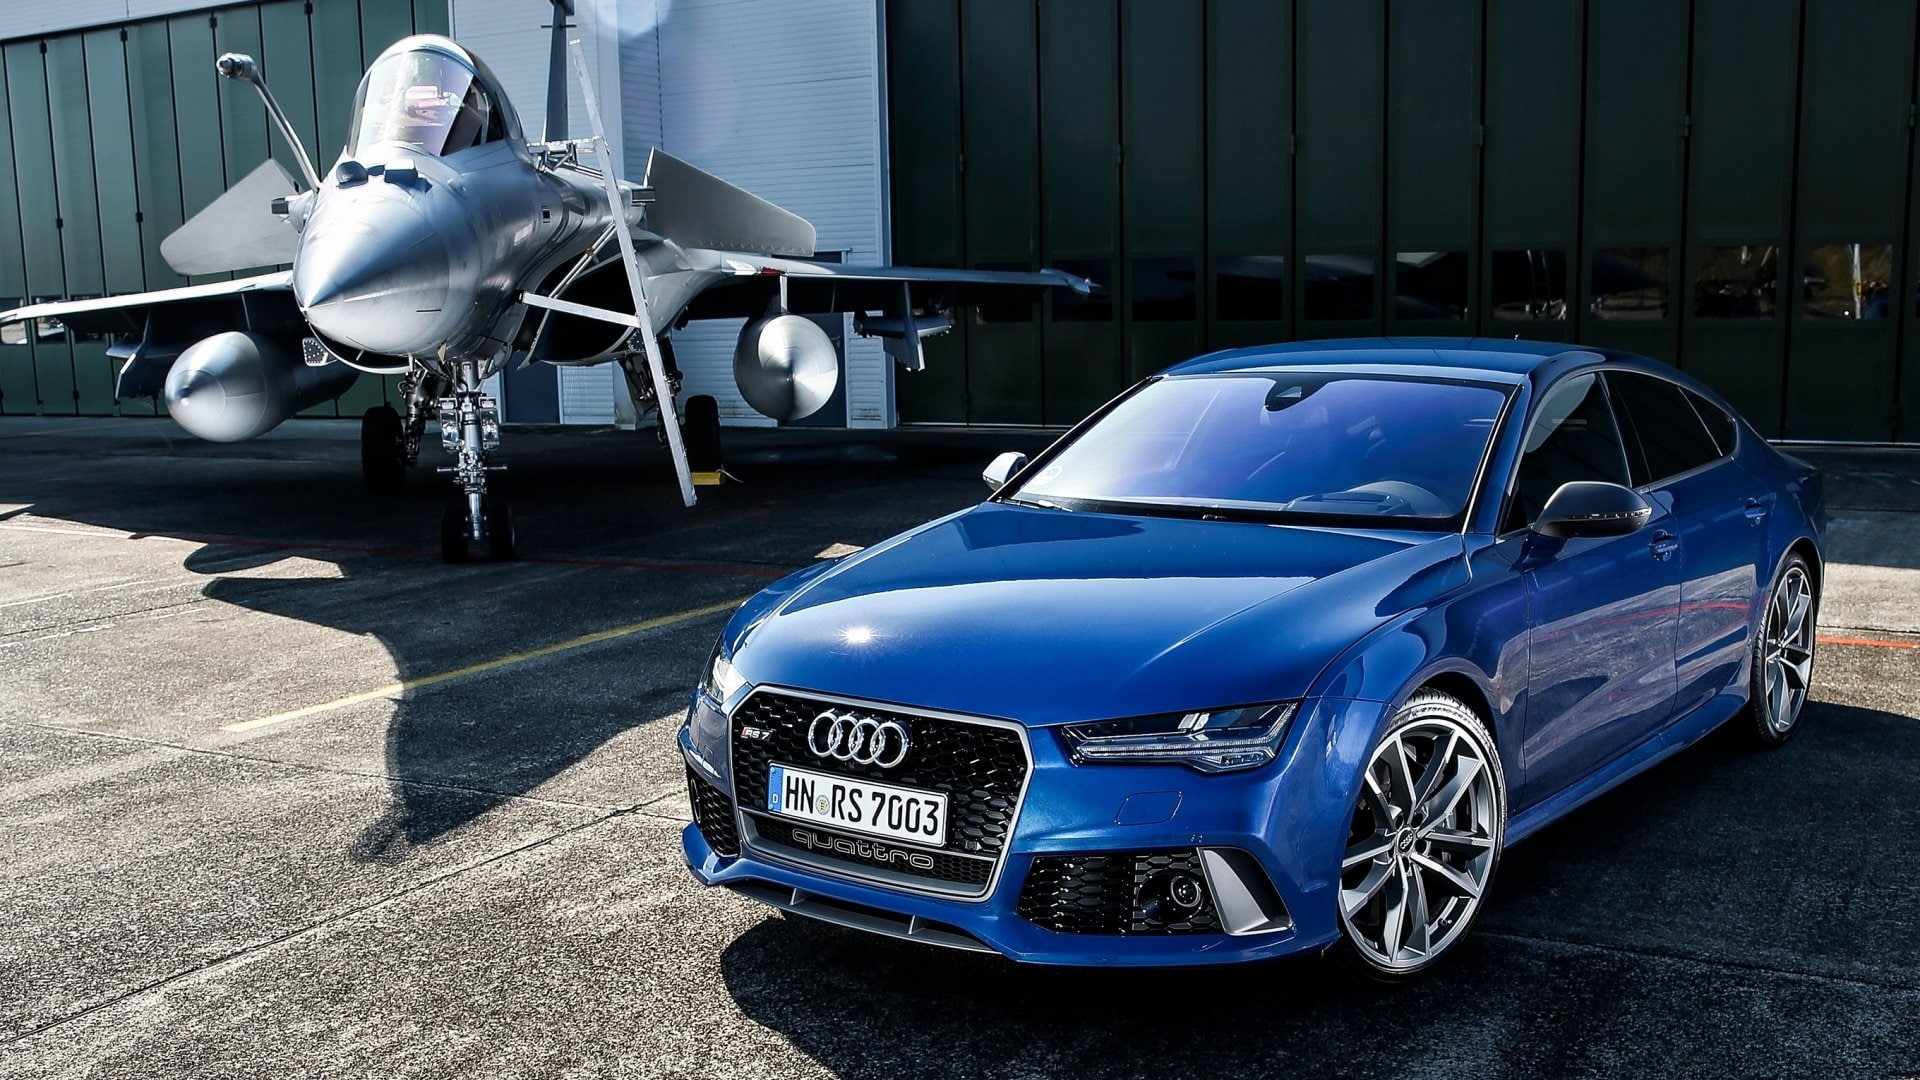 Audi, Audi RS7, Blue Car, Jet Fighter, Luxury Car, Vehicle